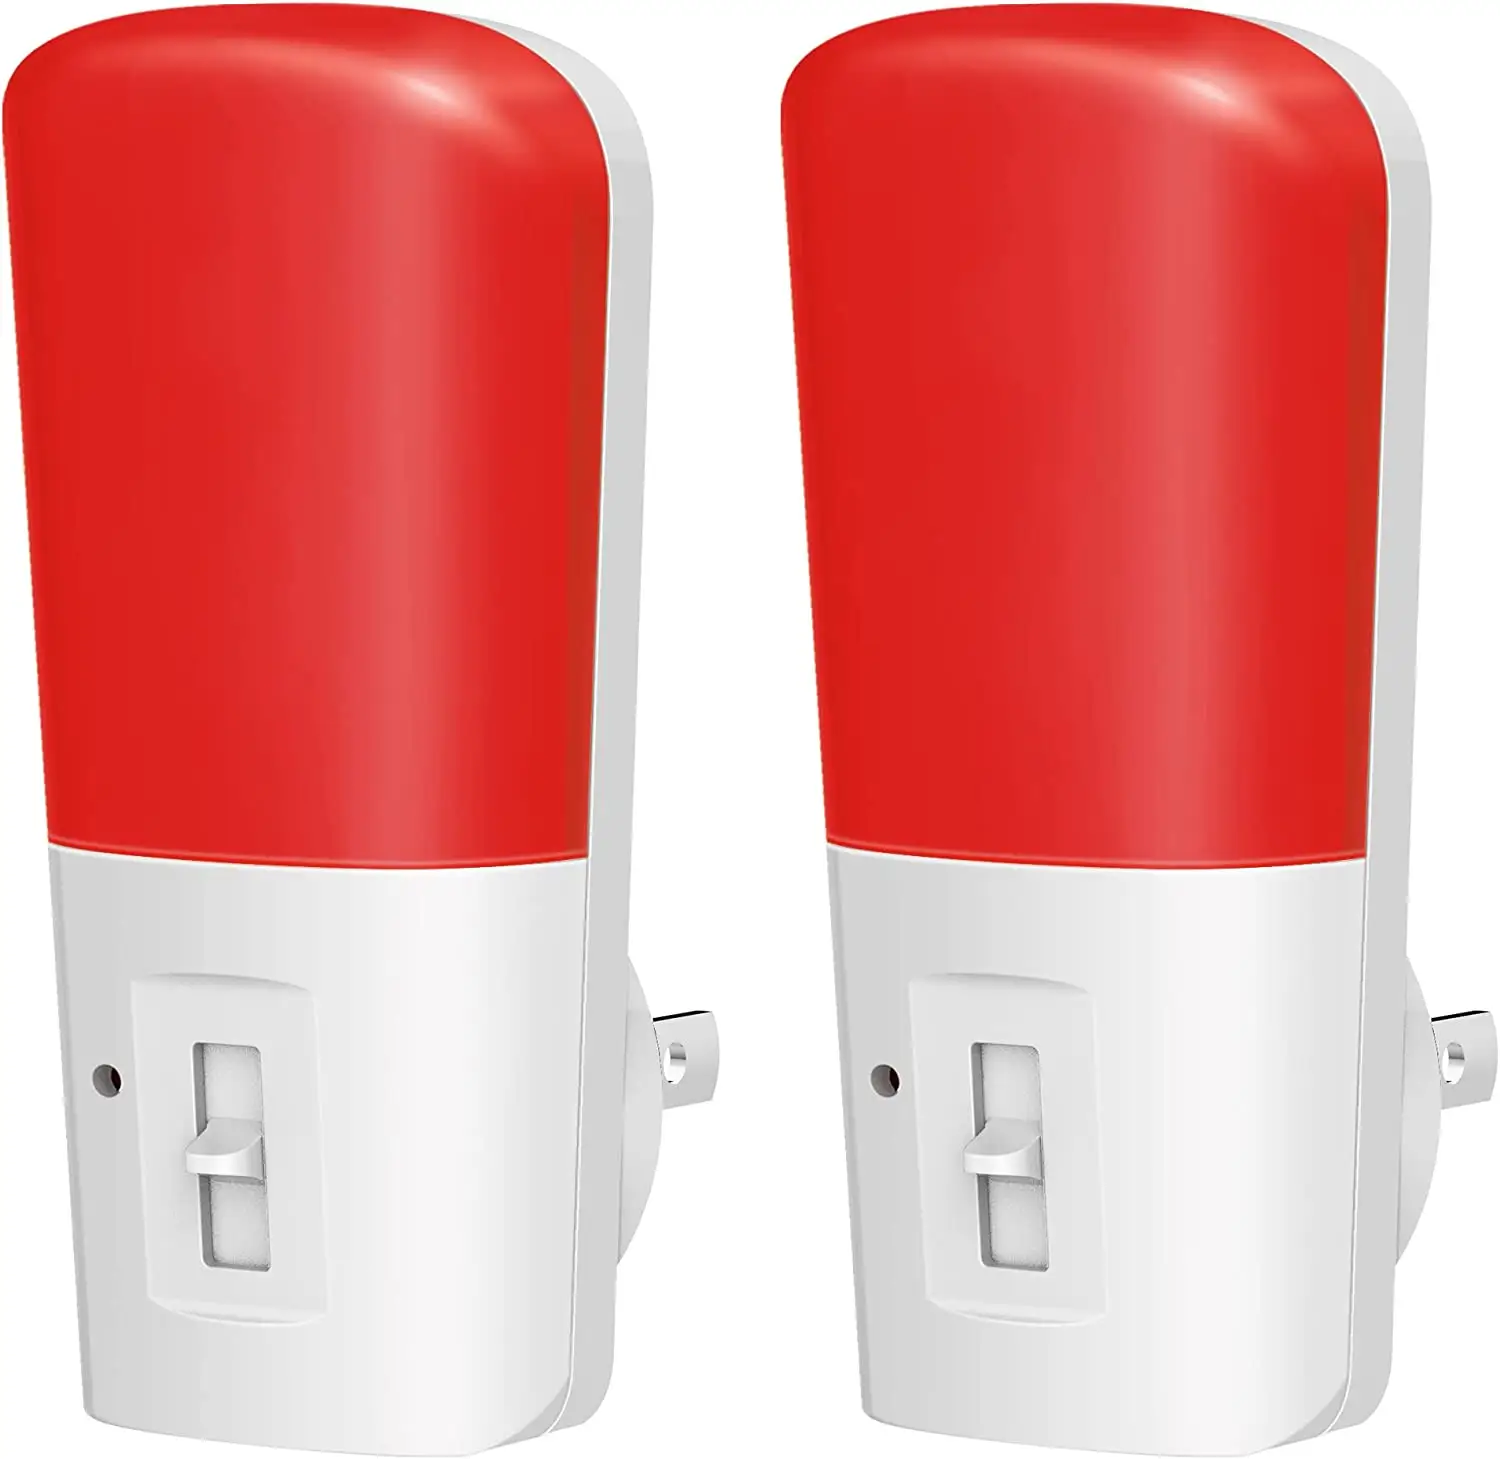 Soft Red Color Dimmable Brightness 1 Watt Energy Saving Light Sensor Plug In Type LED Night Light Lamp